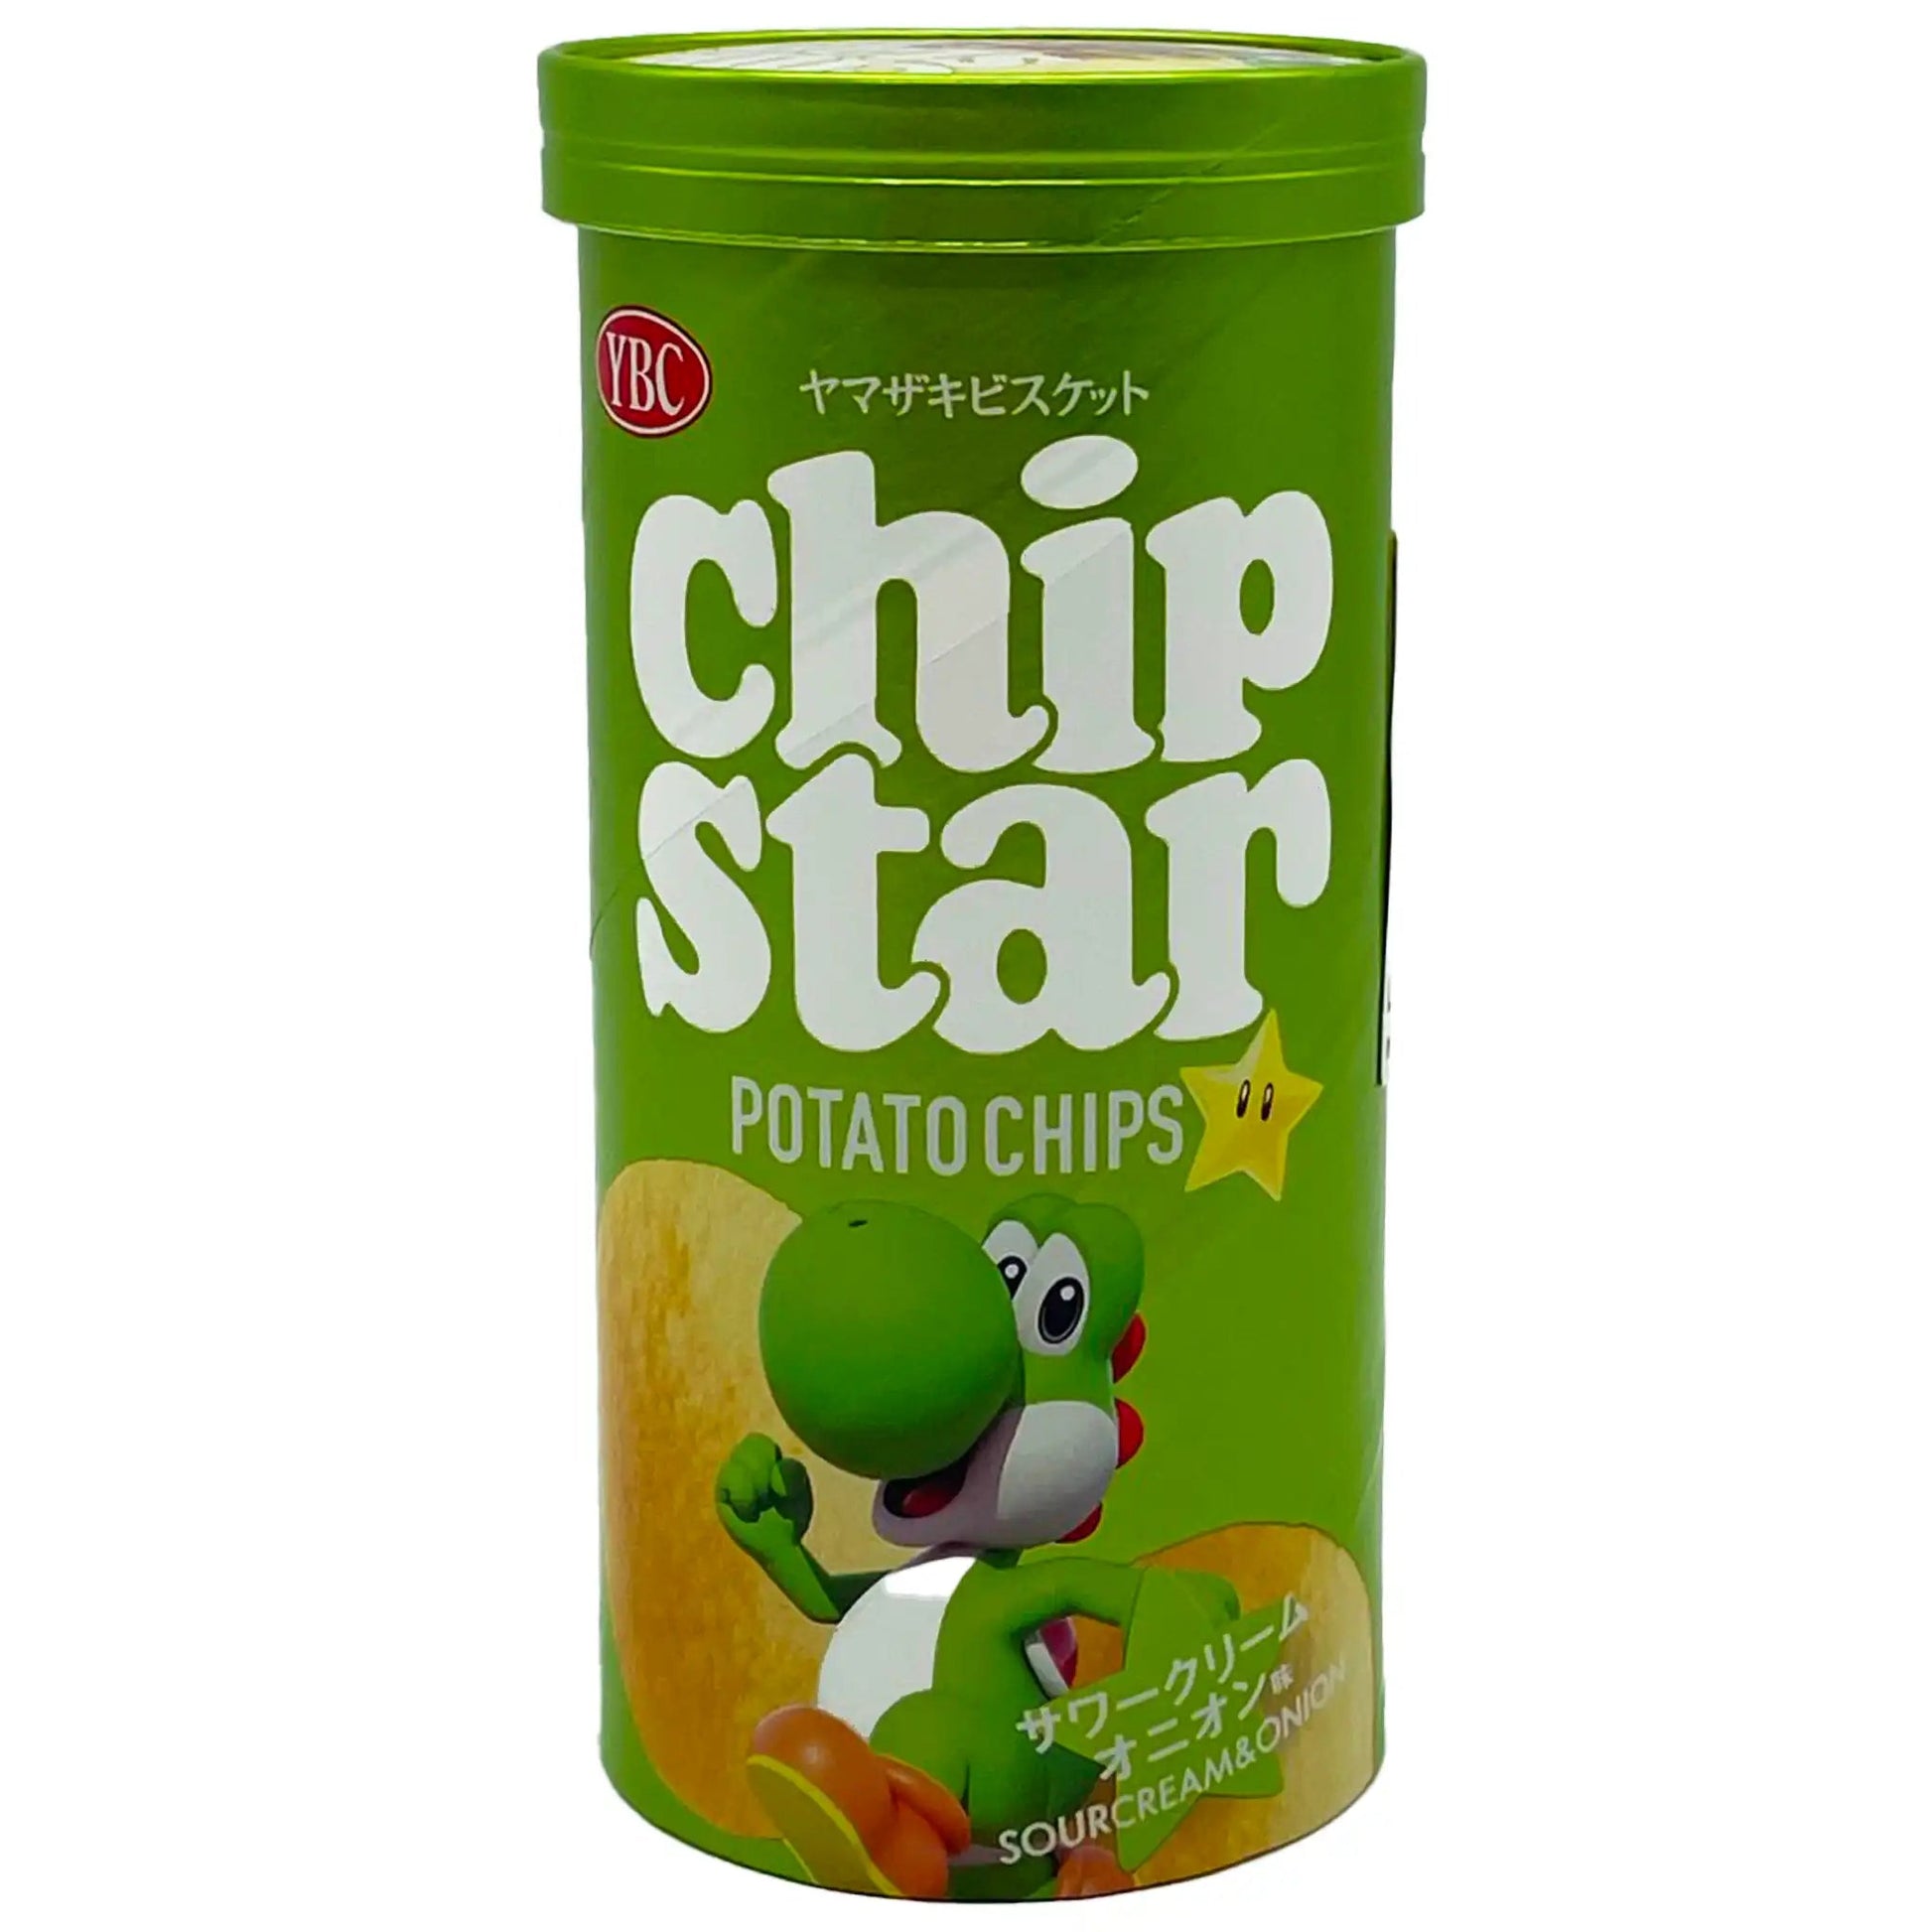 YBC Chip Star Sour Cream Onion Potato Chips 1.59 oz - Tokyo Central - Chips - YBC -